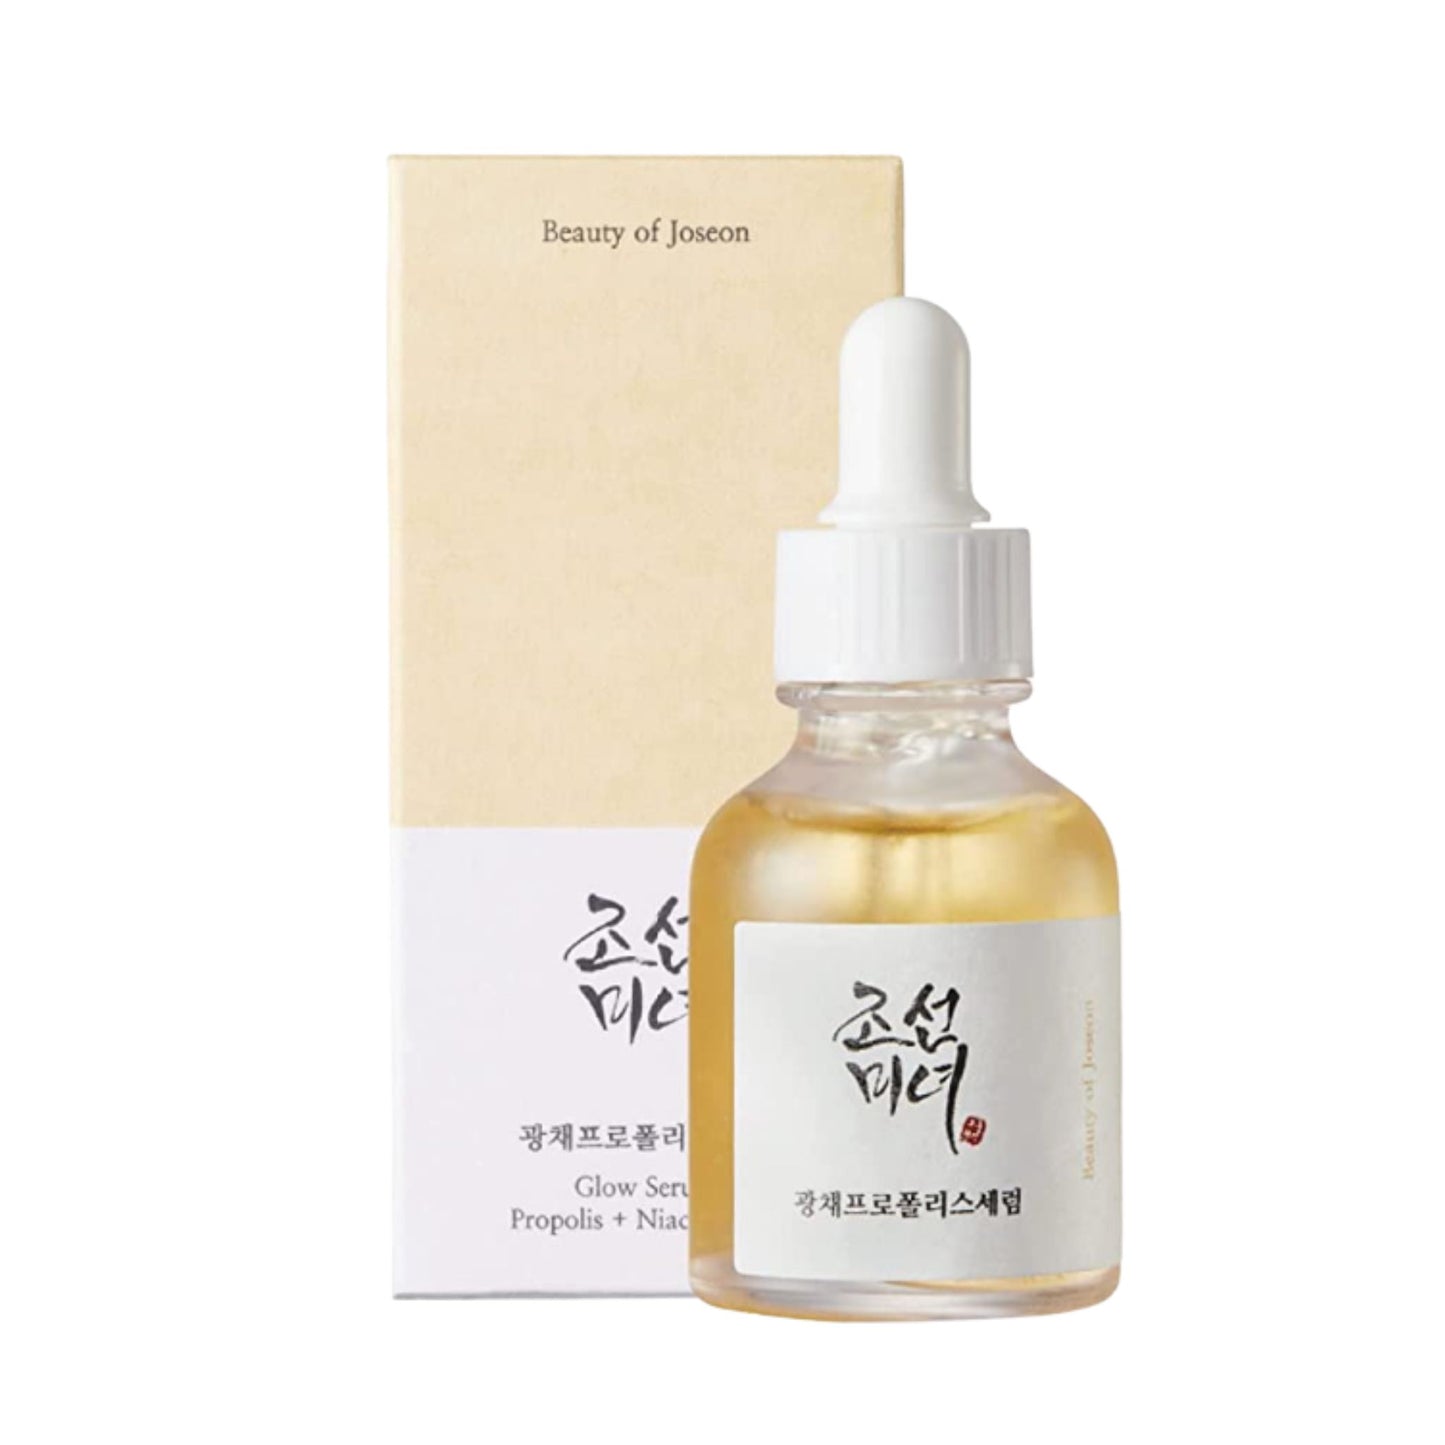 Beauty Of Joseon Glow Serum Propolis + Niacinamide – 30ml